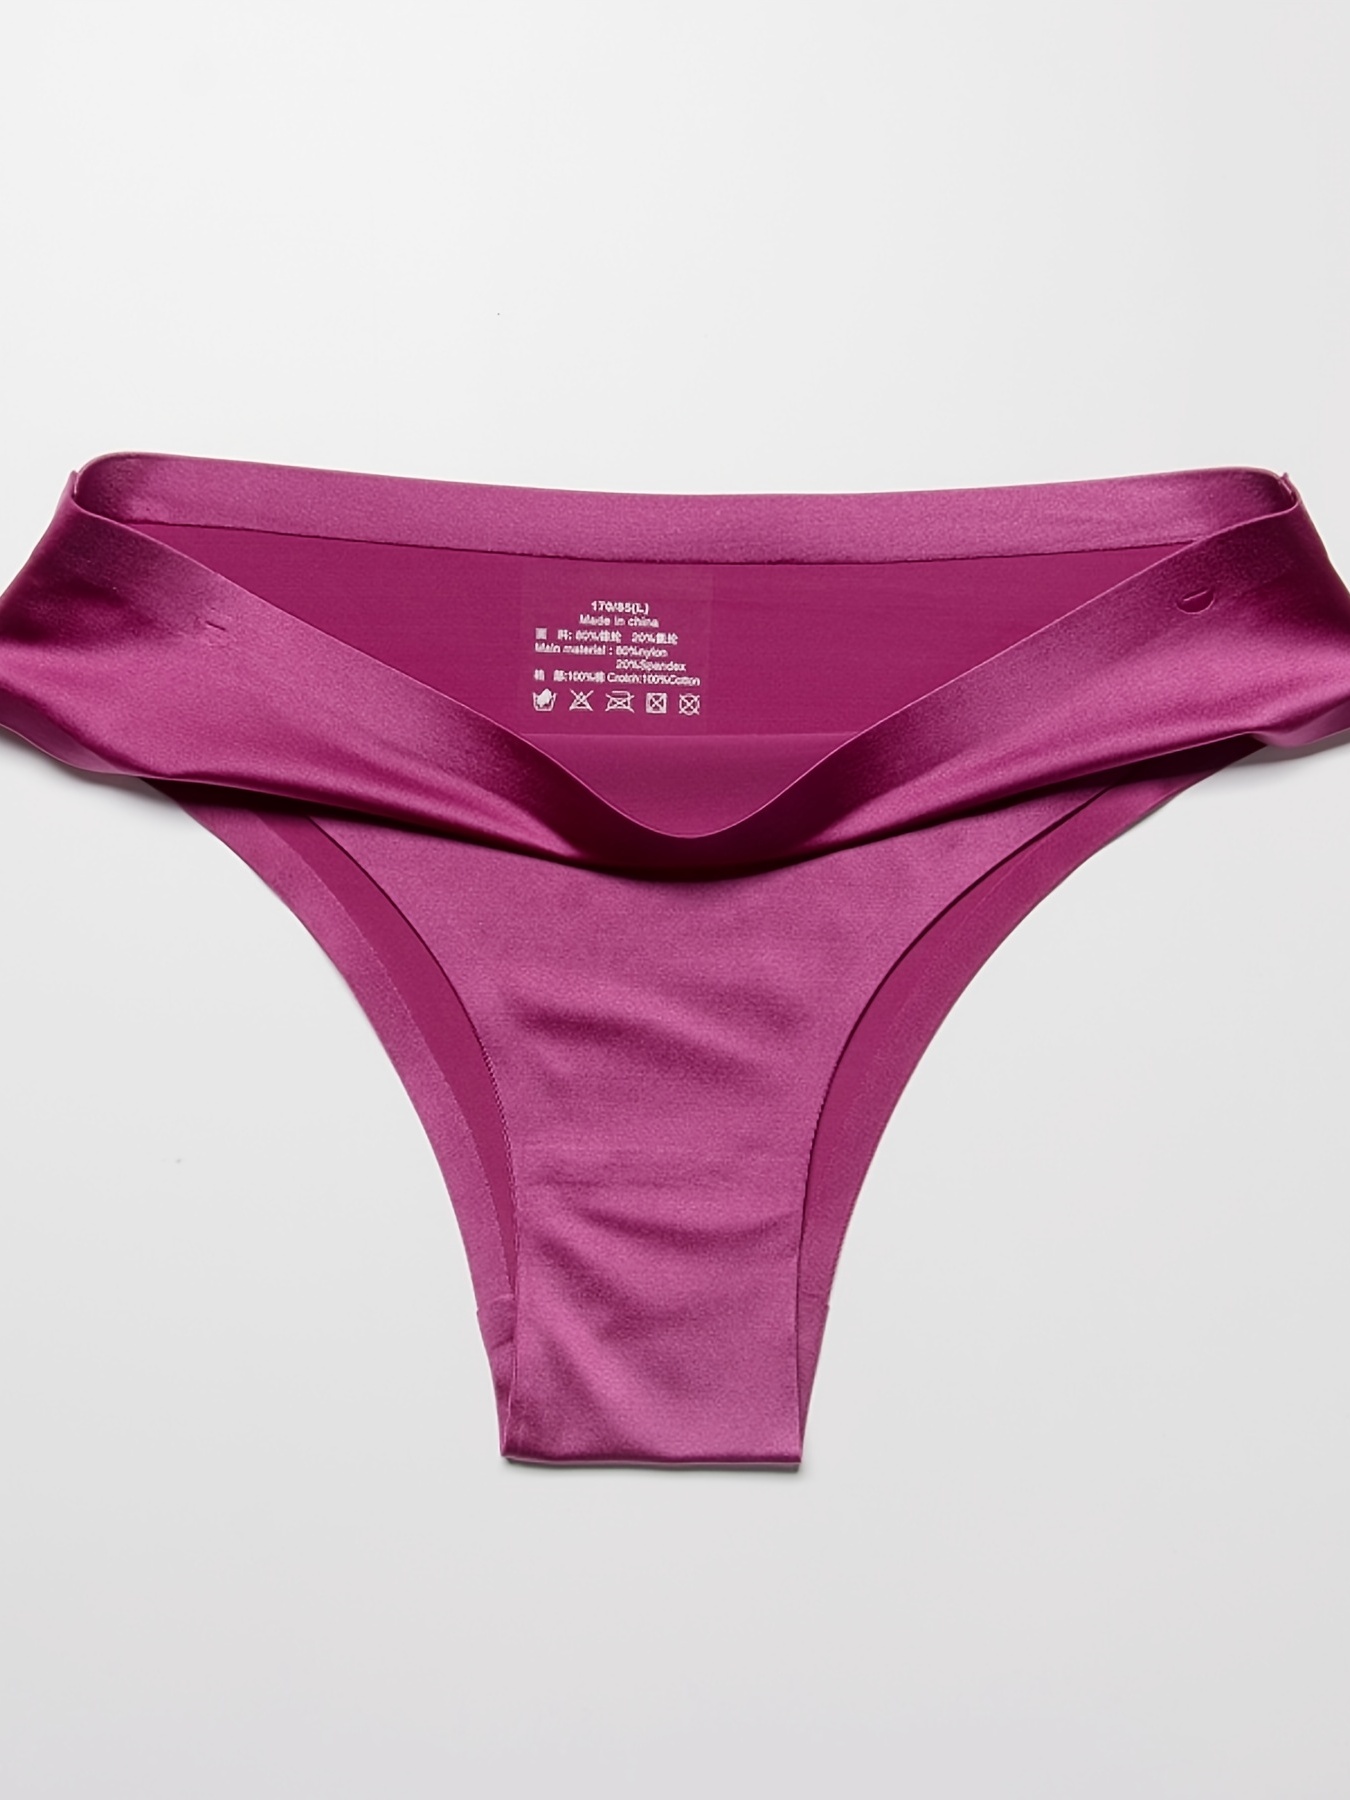 New Sexy Panties for Women Underwear Girls Model Briefs Solid